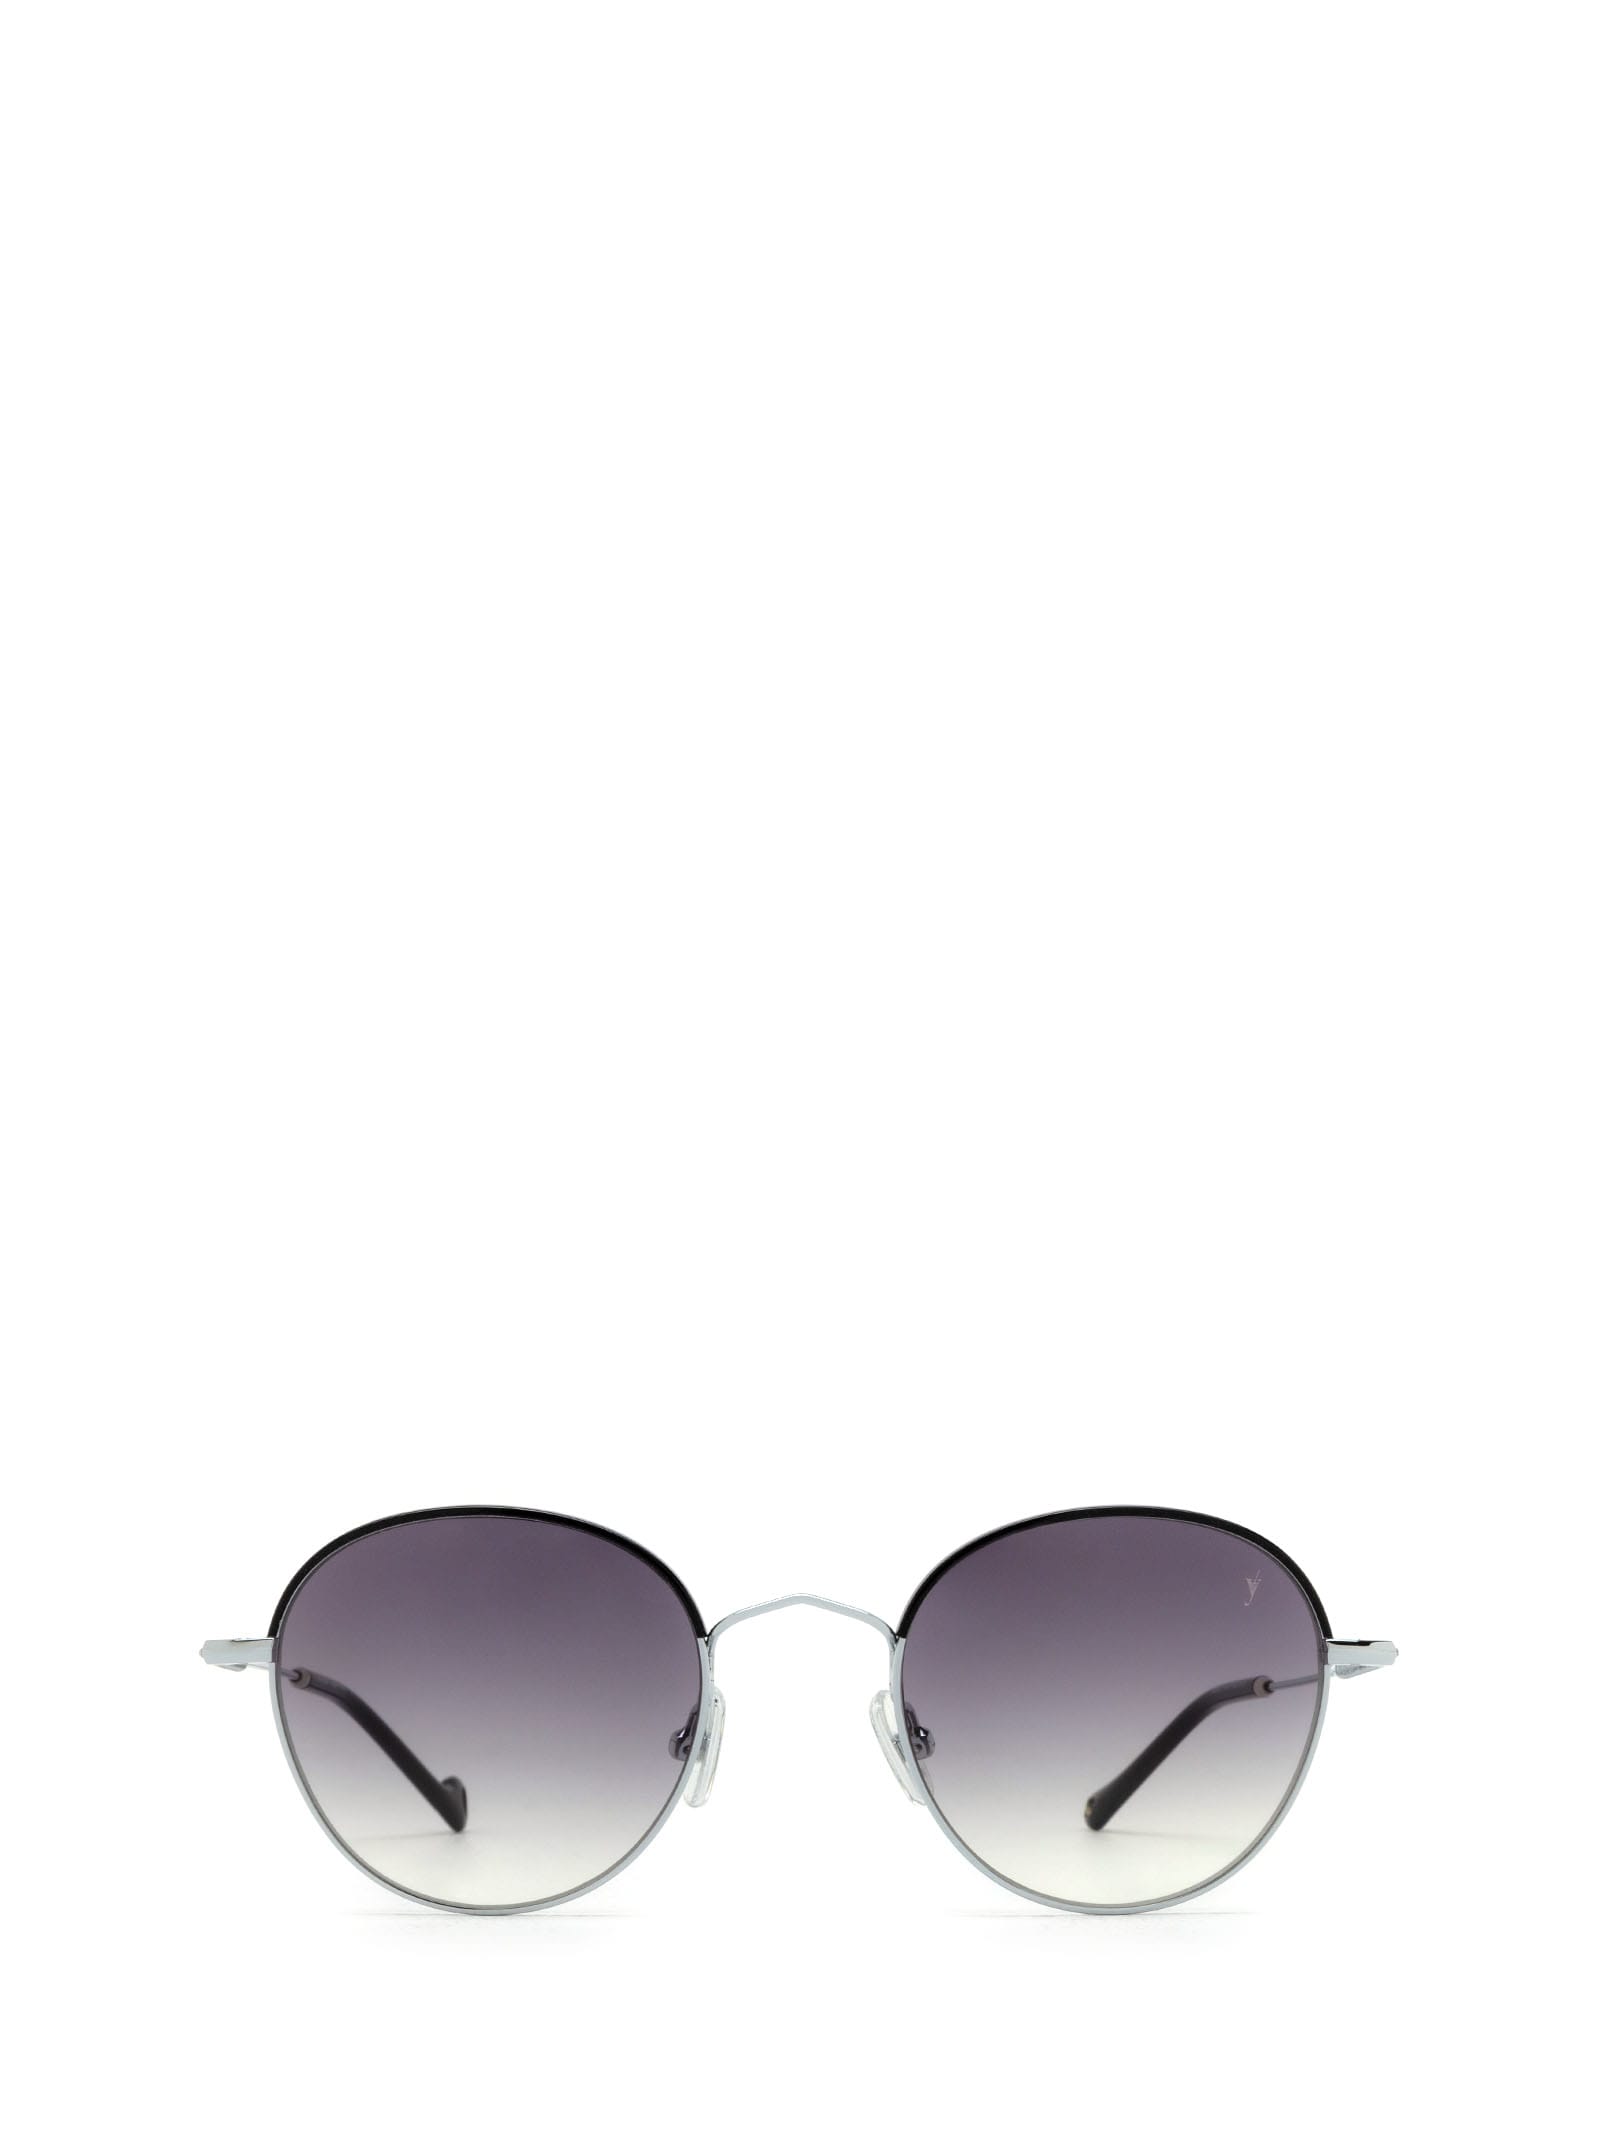 Gobi Black Sunglasses